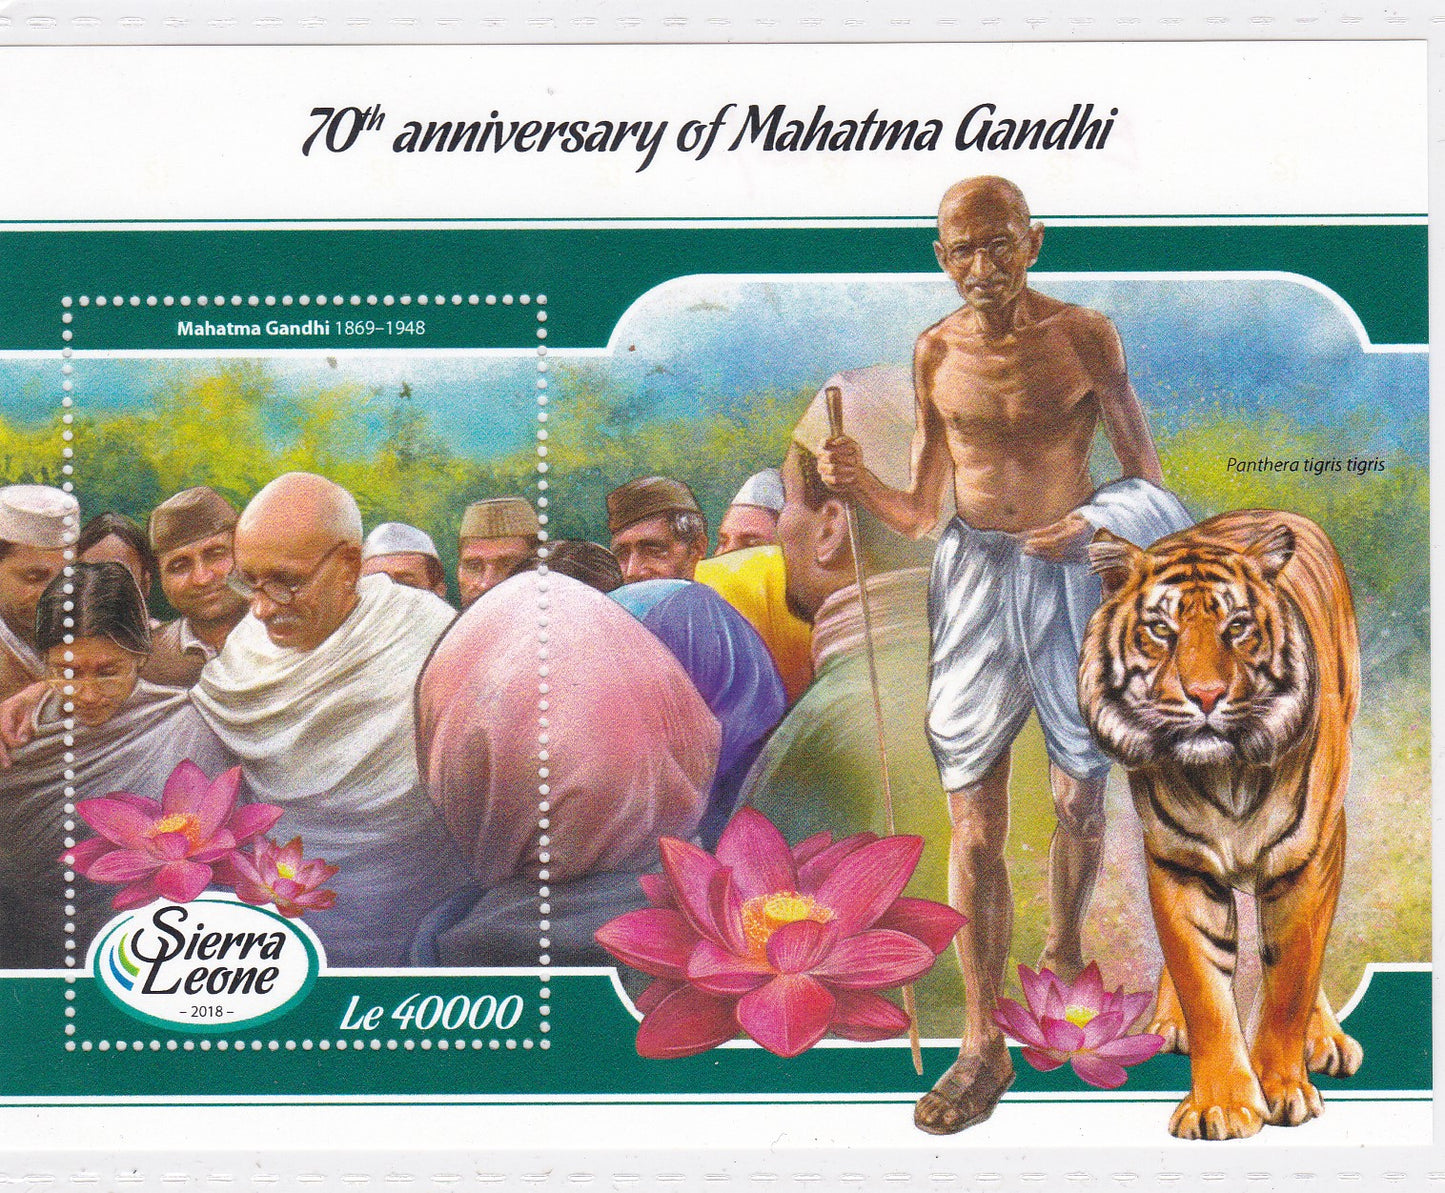 Sierra Leone 1 value ms of 2018 on Gandhi with Lotus flower & Tiger